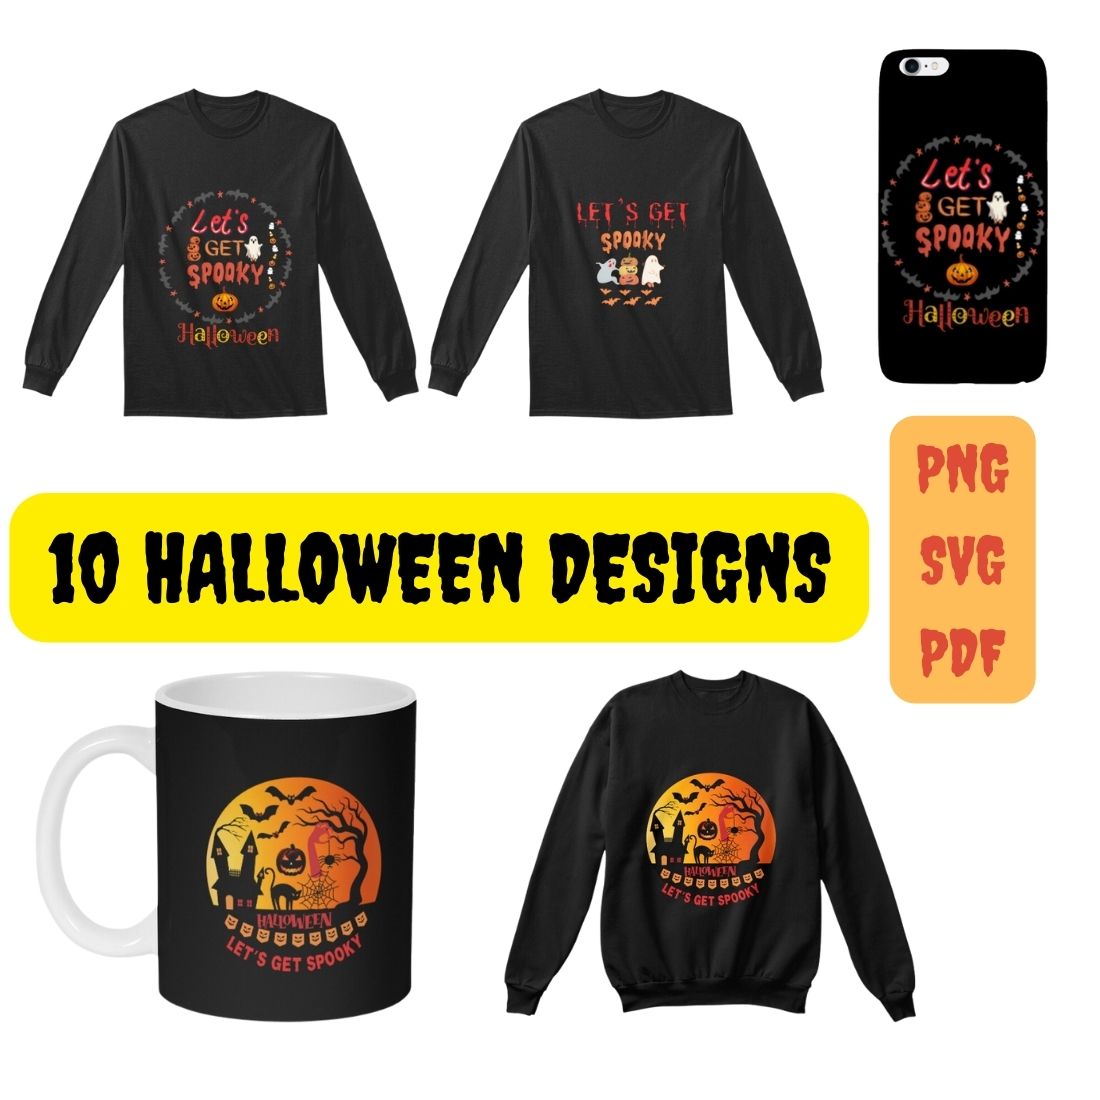 10 Halloween Designs bundle preview image.